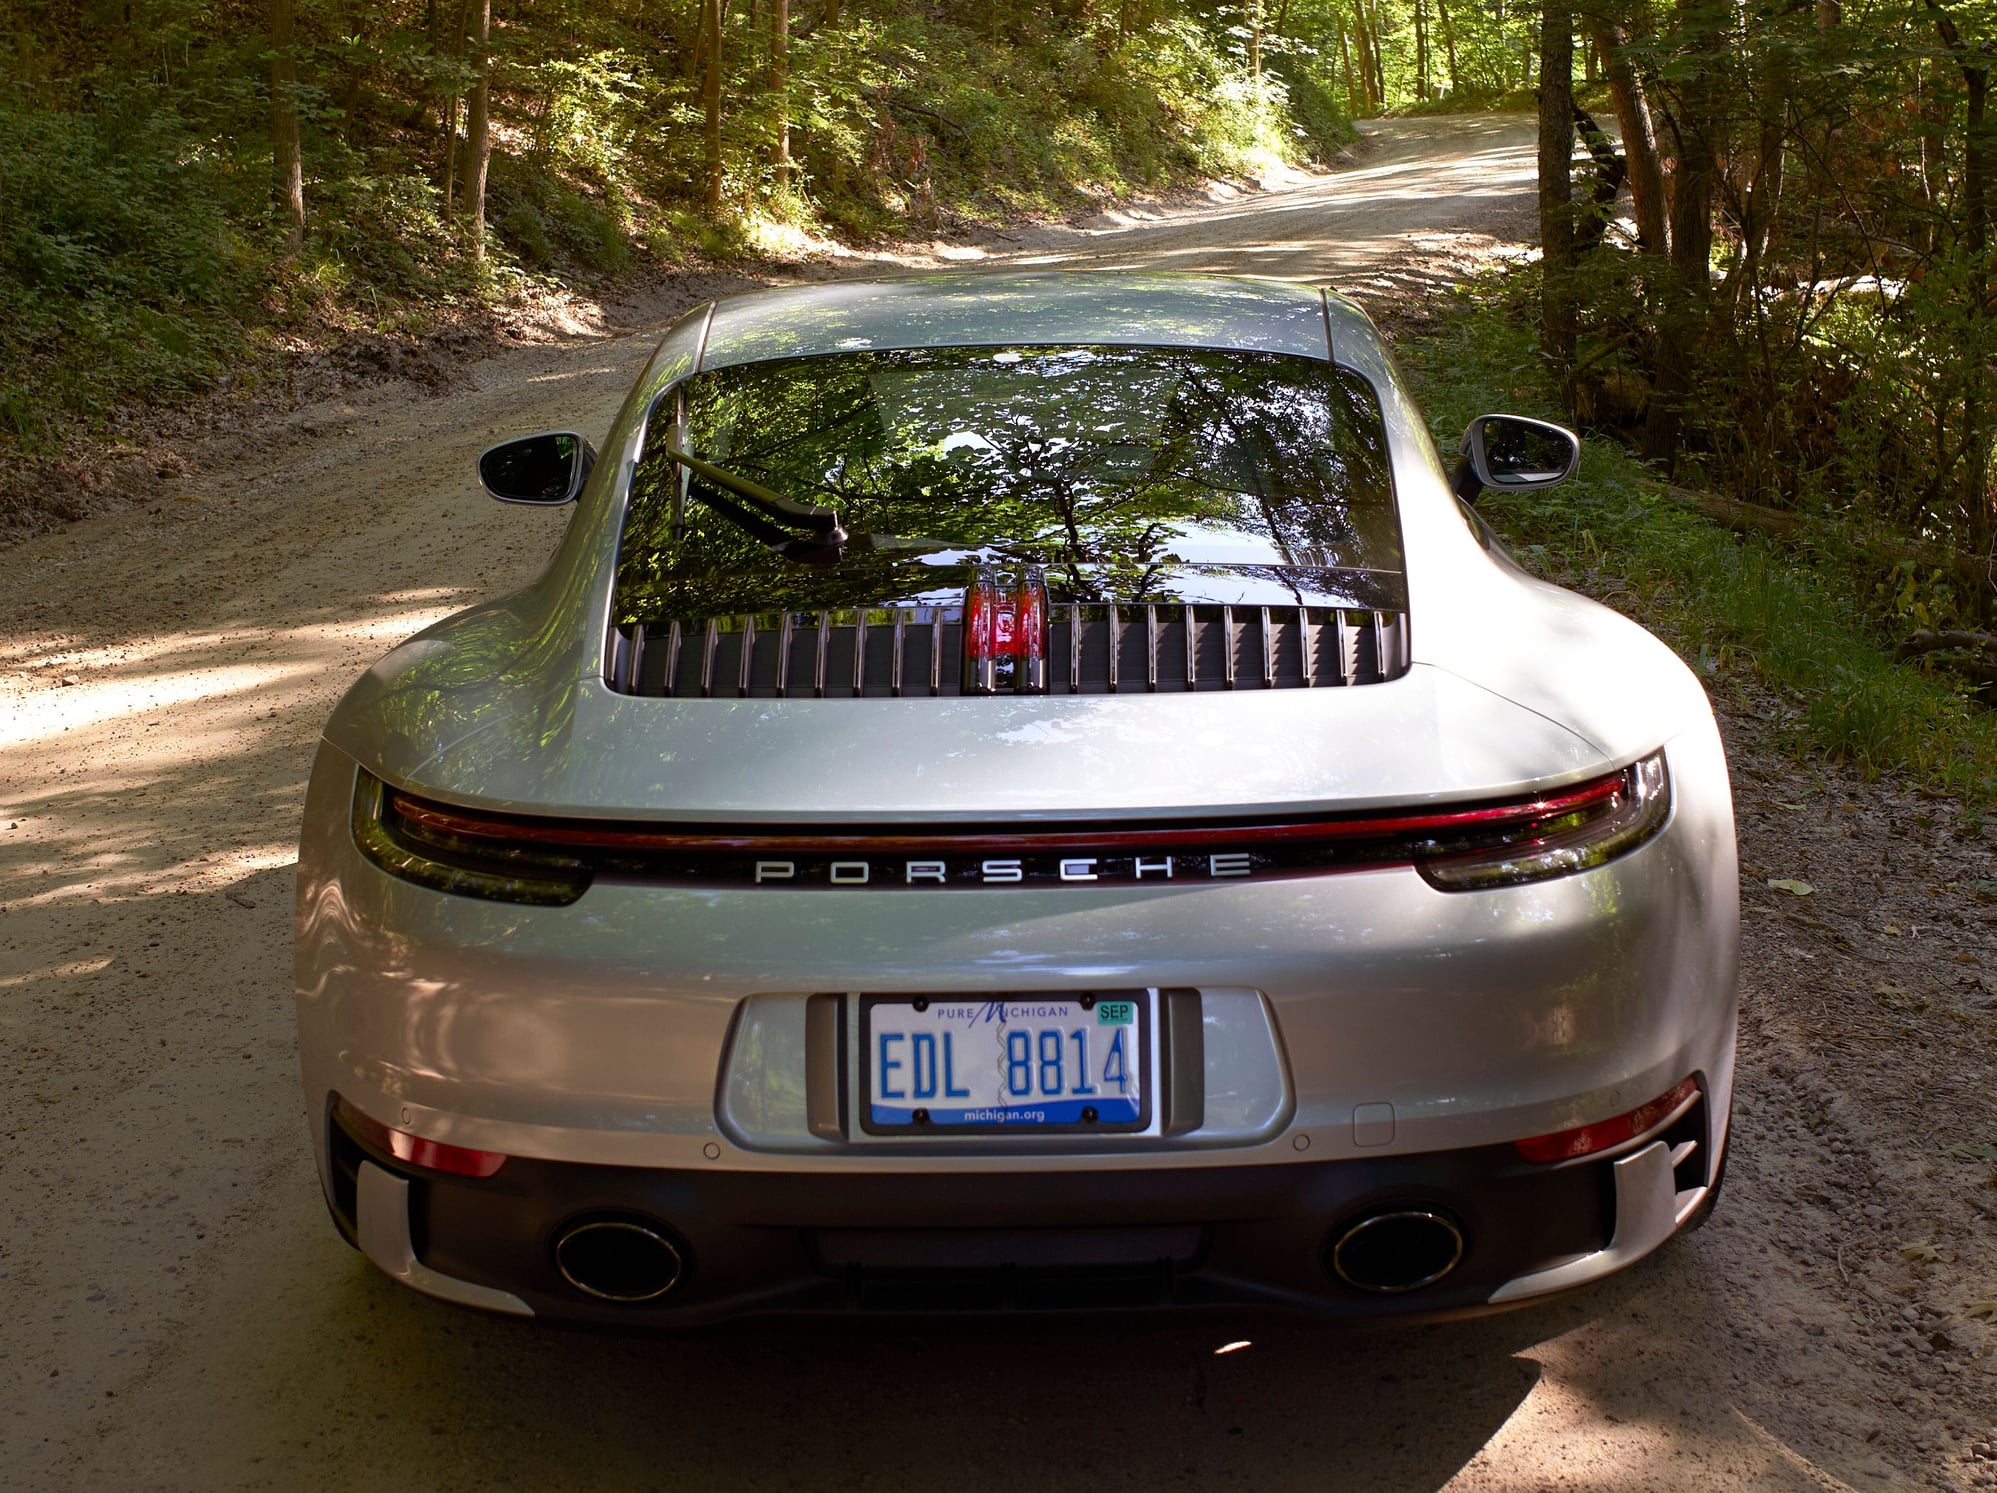 2020 Porsche 911 - 2020 992S 7MT 350 miles Dolomite Silver Metallic - Used - VIN WPOAB2A92LS229389 - 350 Miles - 6 cyl - 2WD - Manual - Coupe - Silver - Ann Arbor, MI 48103, United States